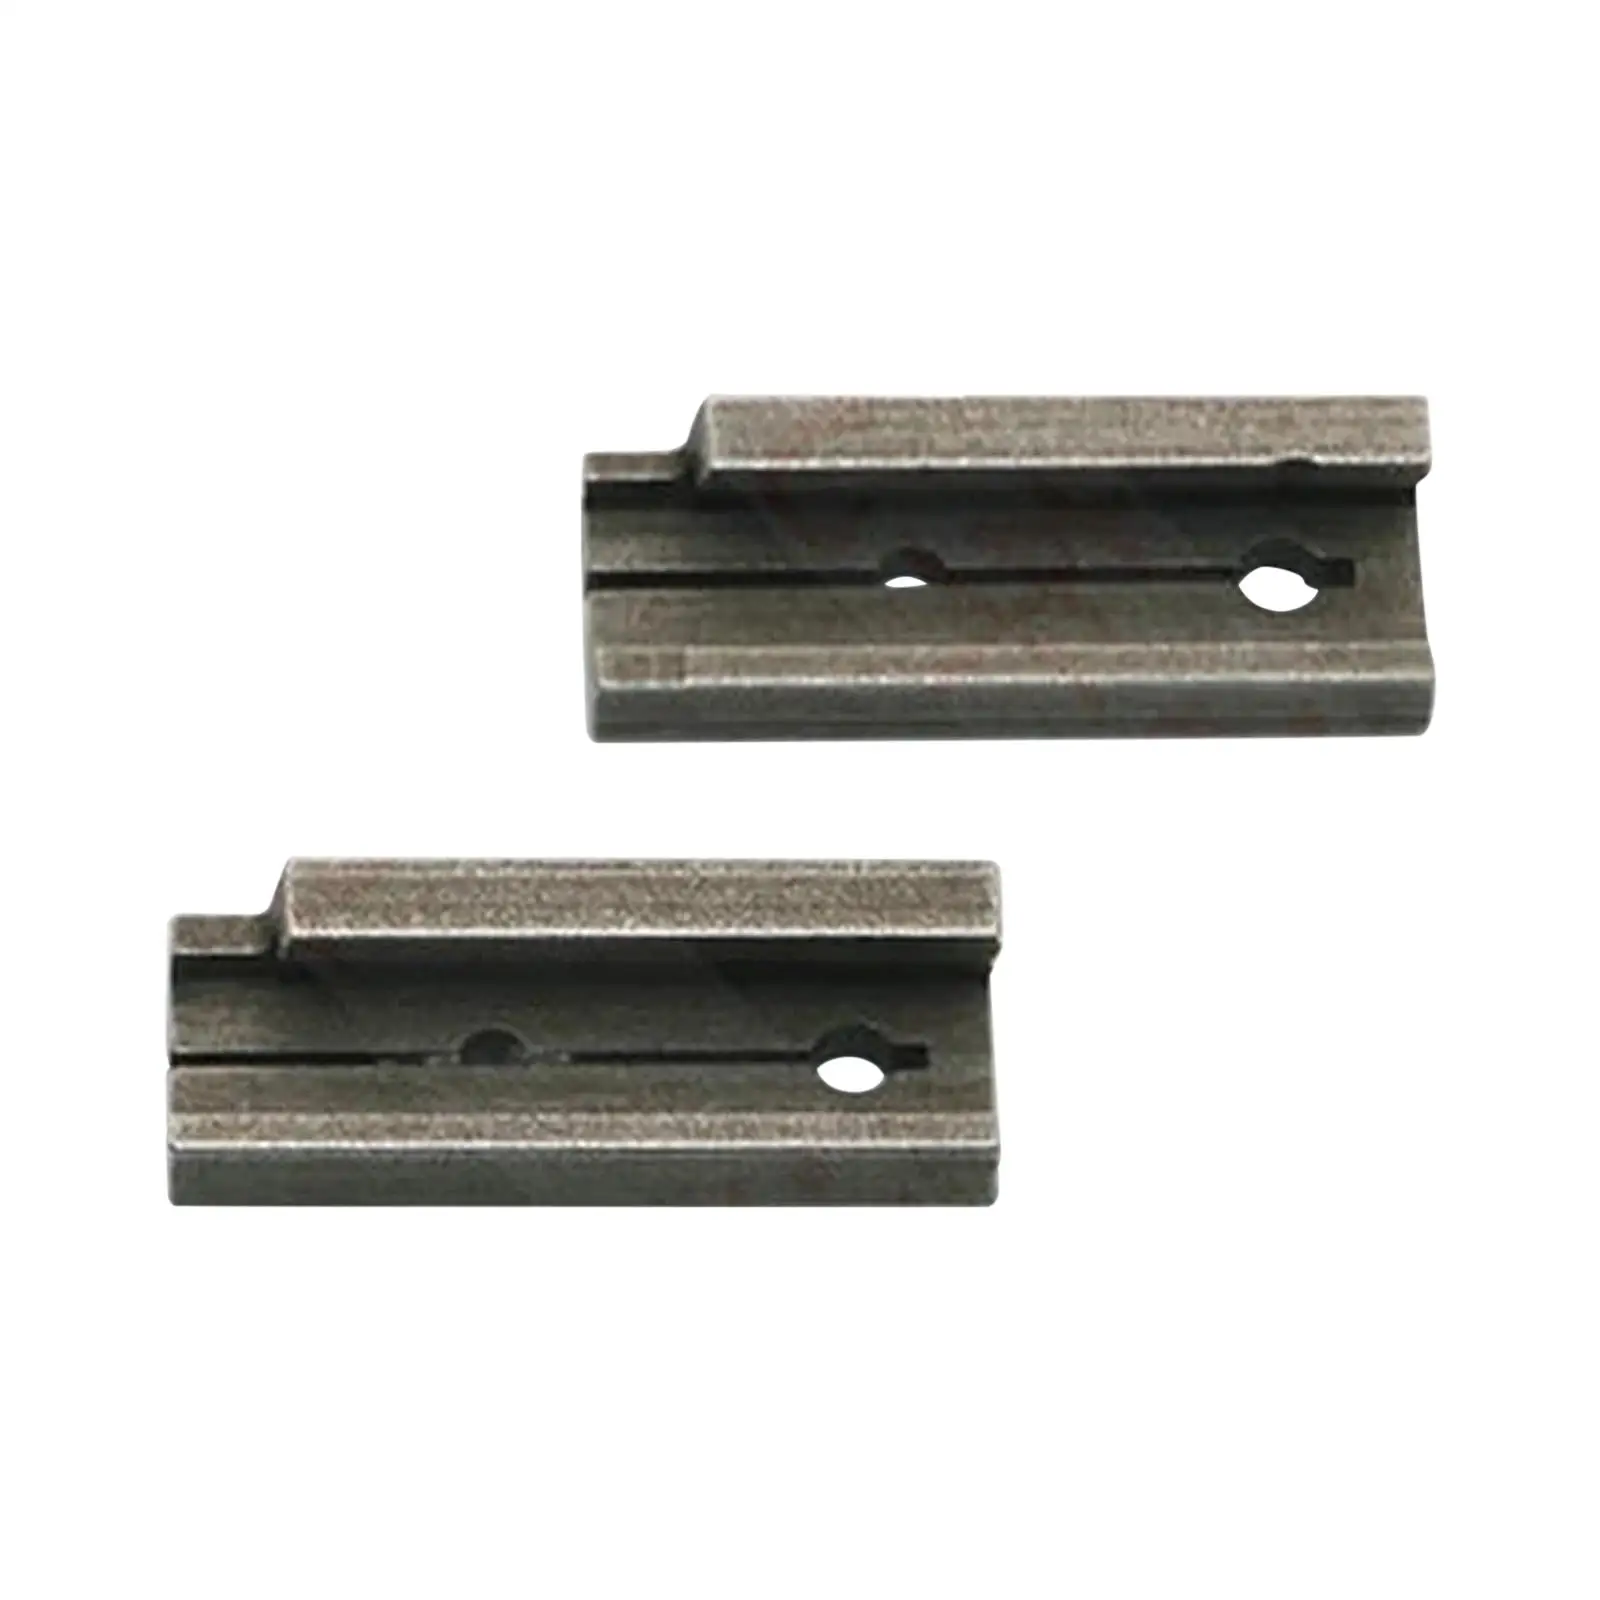 Duplicating Fixture Clamp for Ford Key Blank Key Cutting Machine Accessories Key Cutter Machine Part High Qualtiy